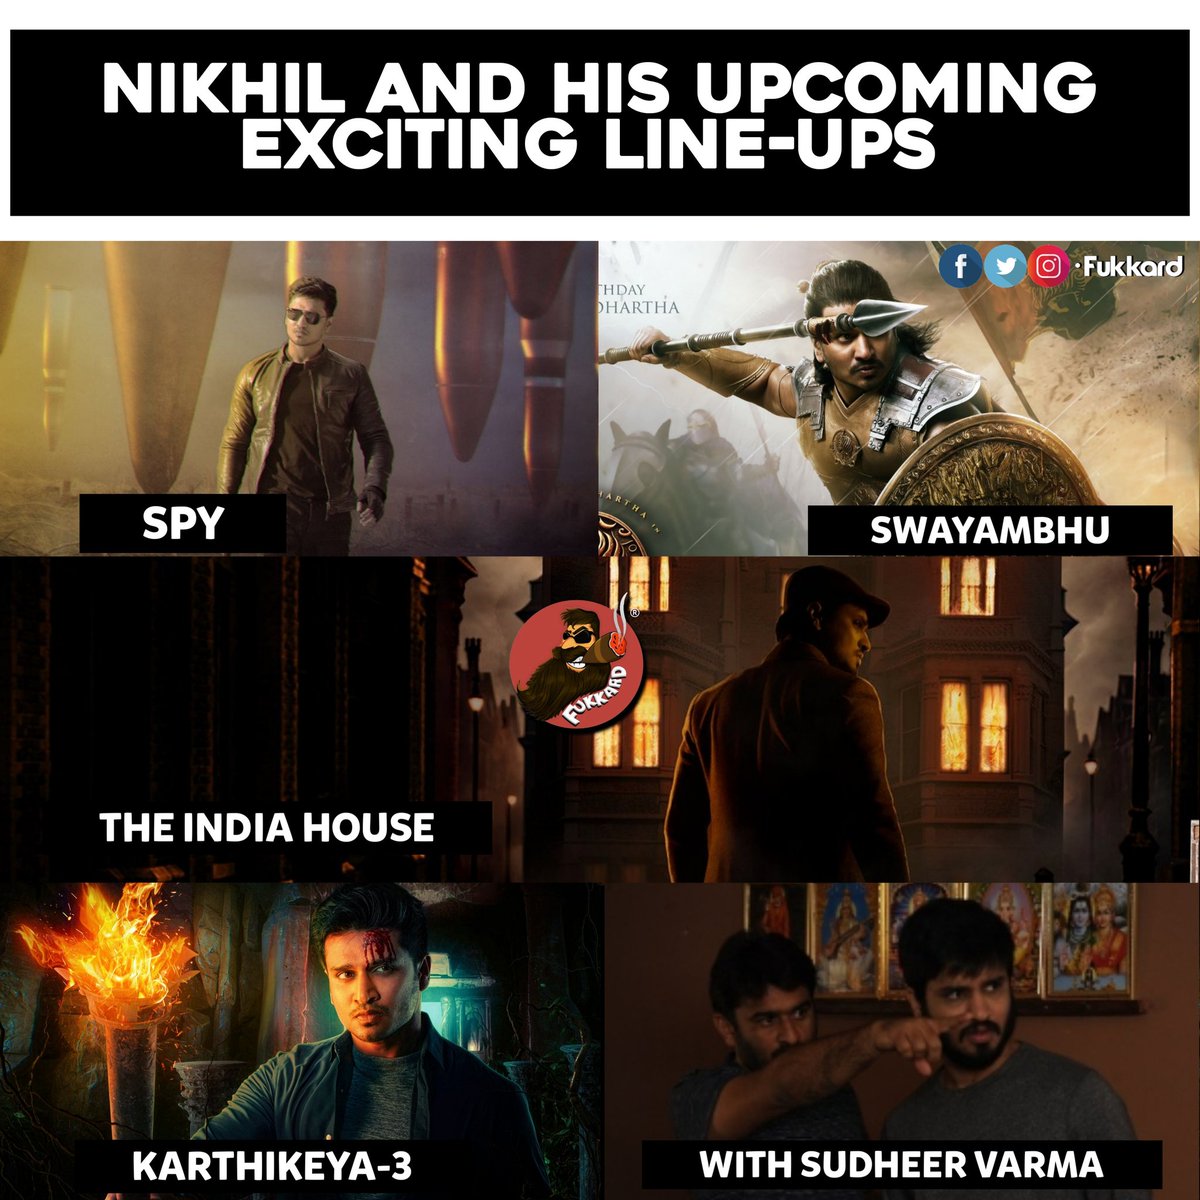 #NikhilSiddhartha and His Massive Lineup 🥵

#Spy #Swayambhu #TheIndiaHouse #Karthikeya3 #Nikhil22